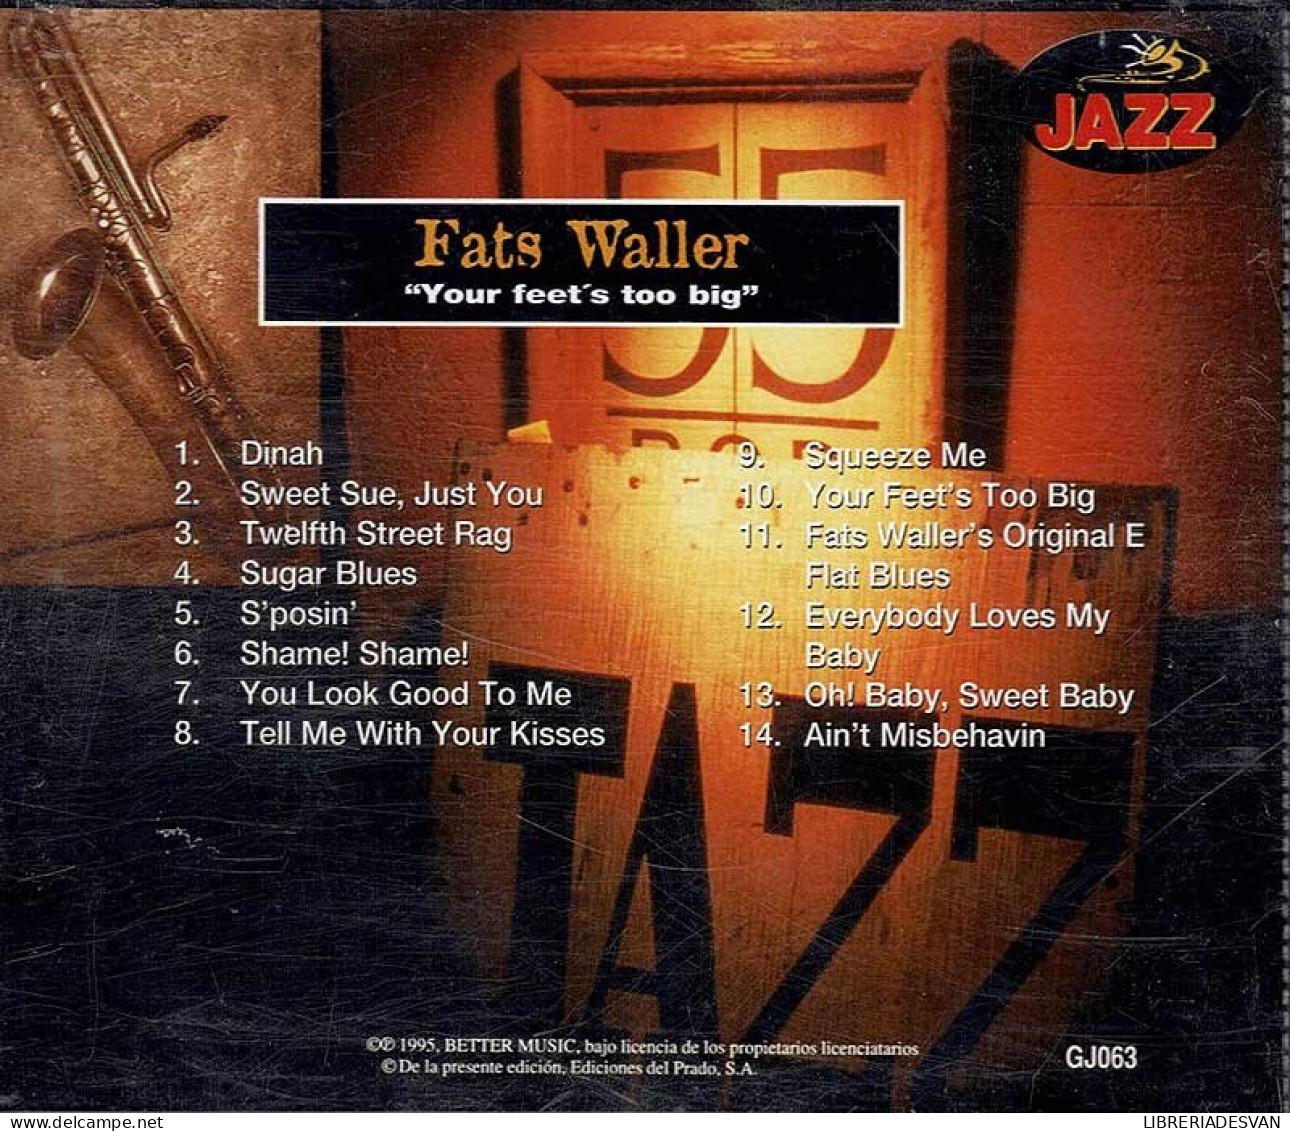 Fats Waller - Your Feet's Too Big. CD - Jazz